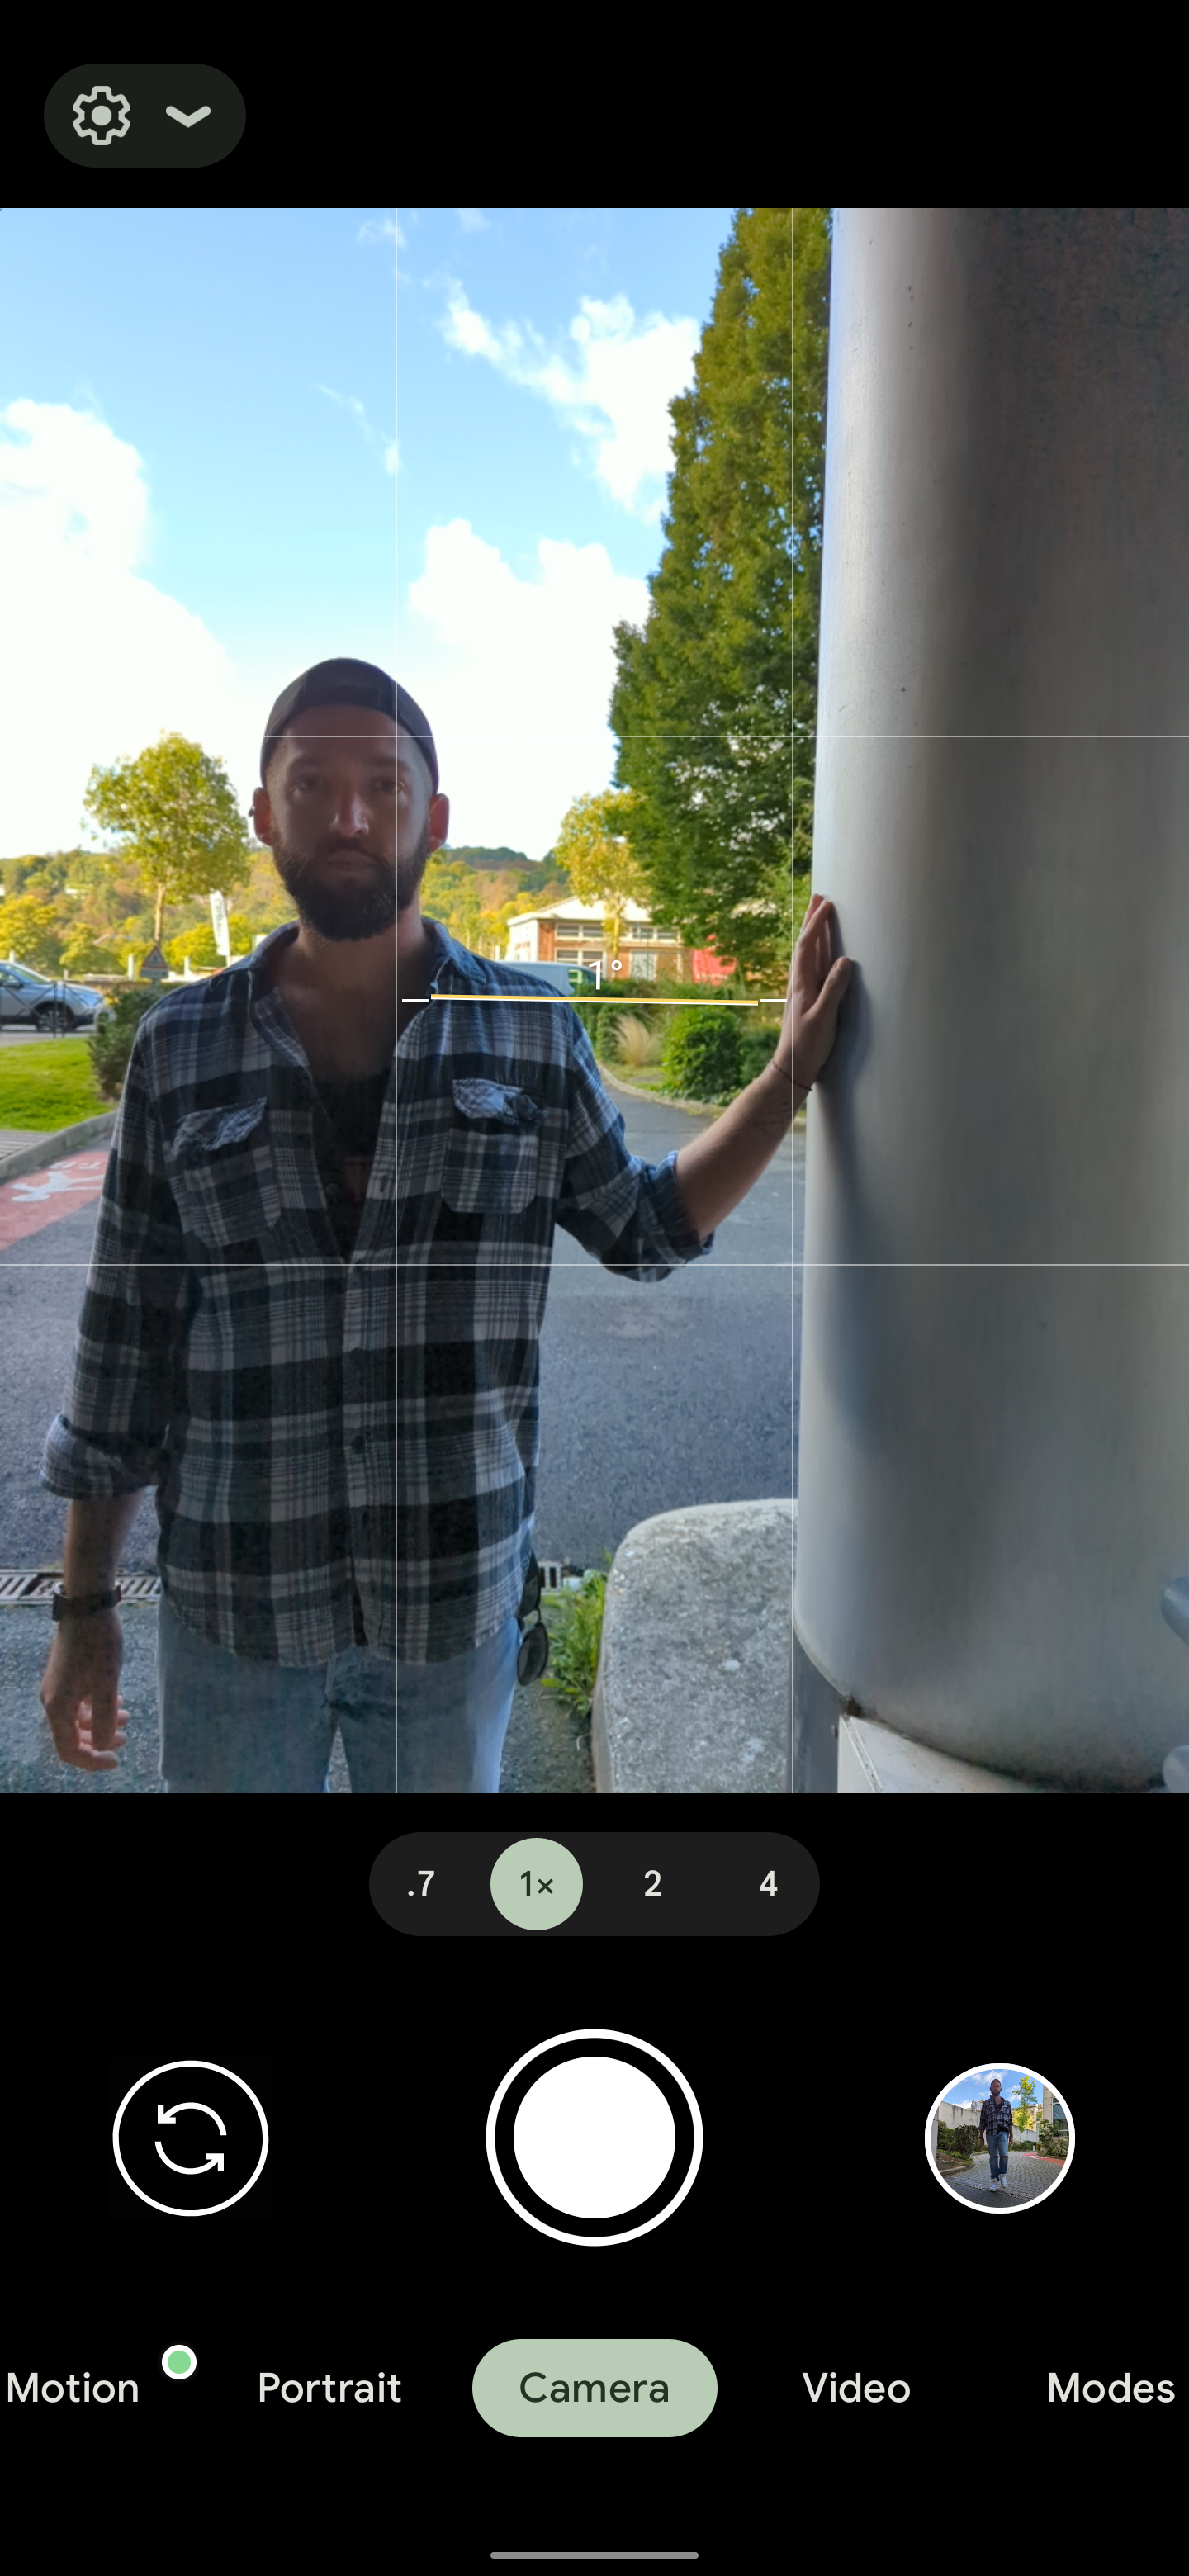 Google Pixel Fold Camera test - DXOMARK